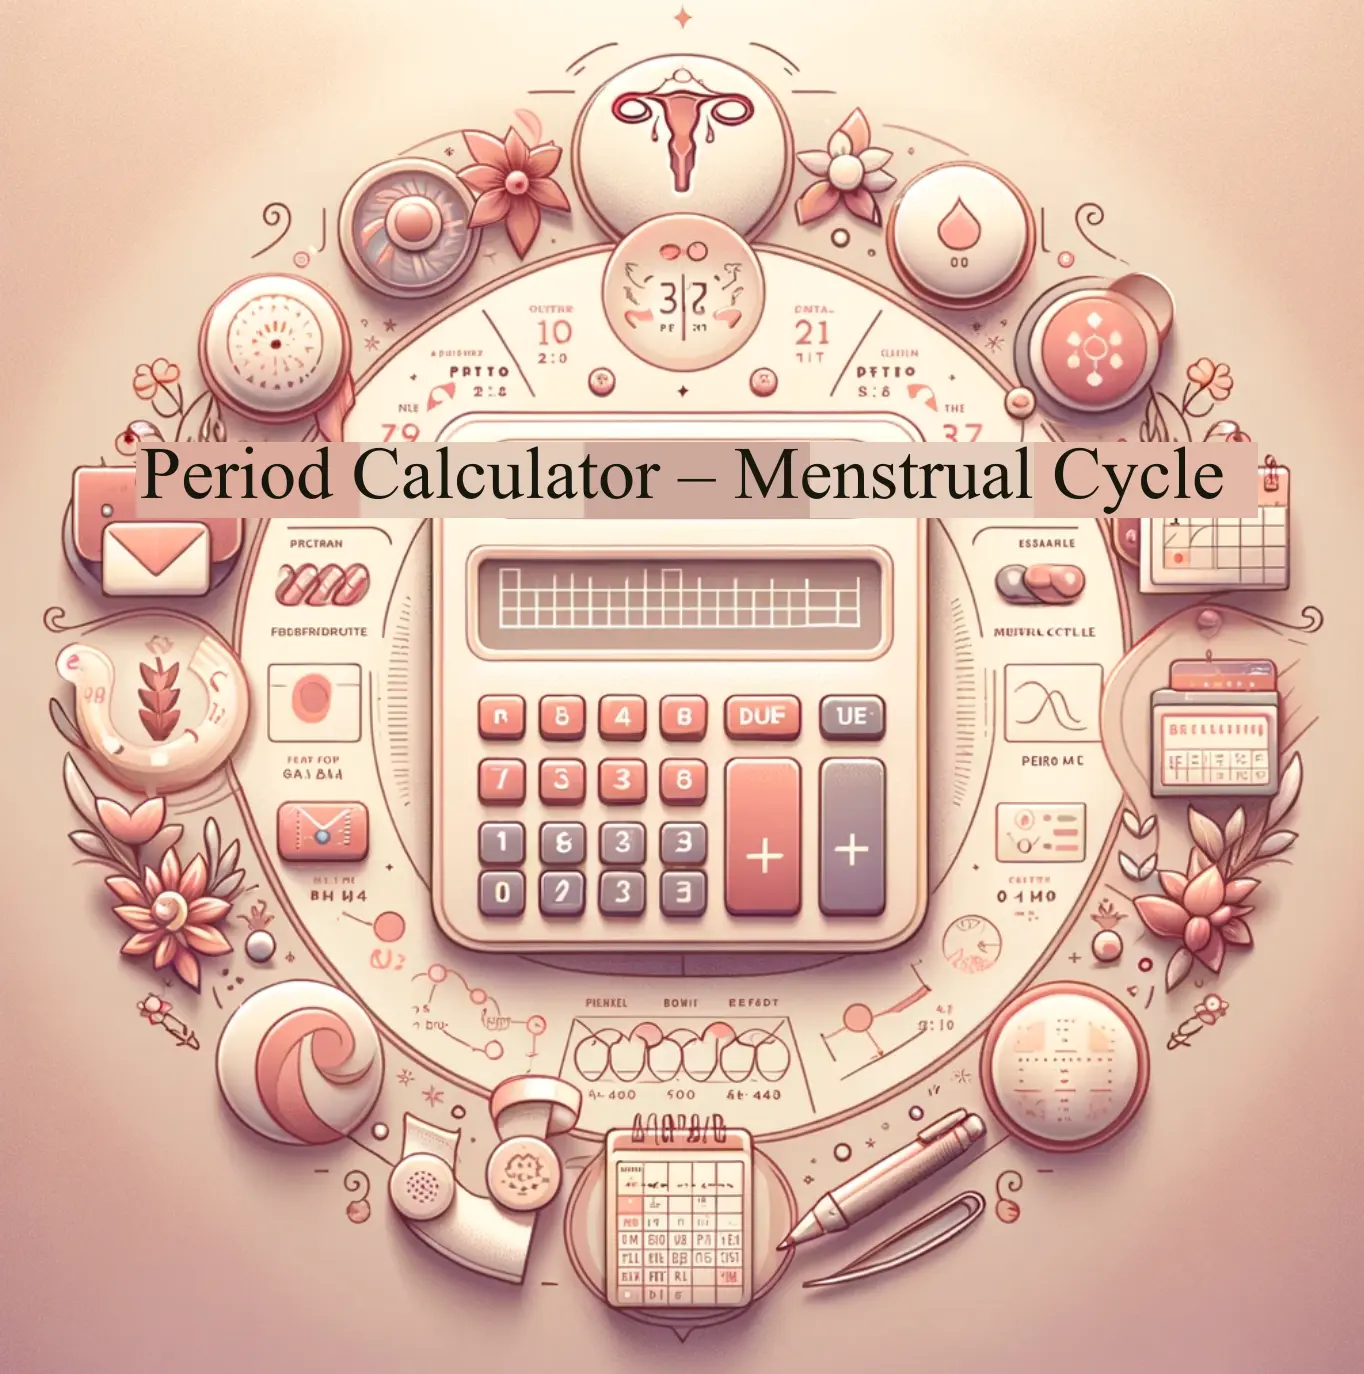 Period Calculator – Menstrual Cycle